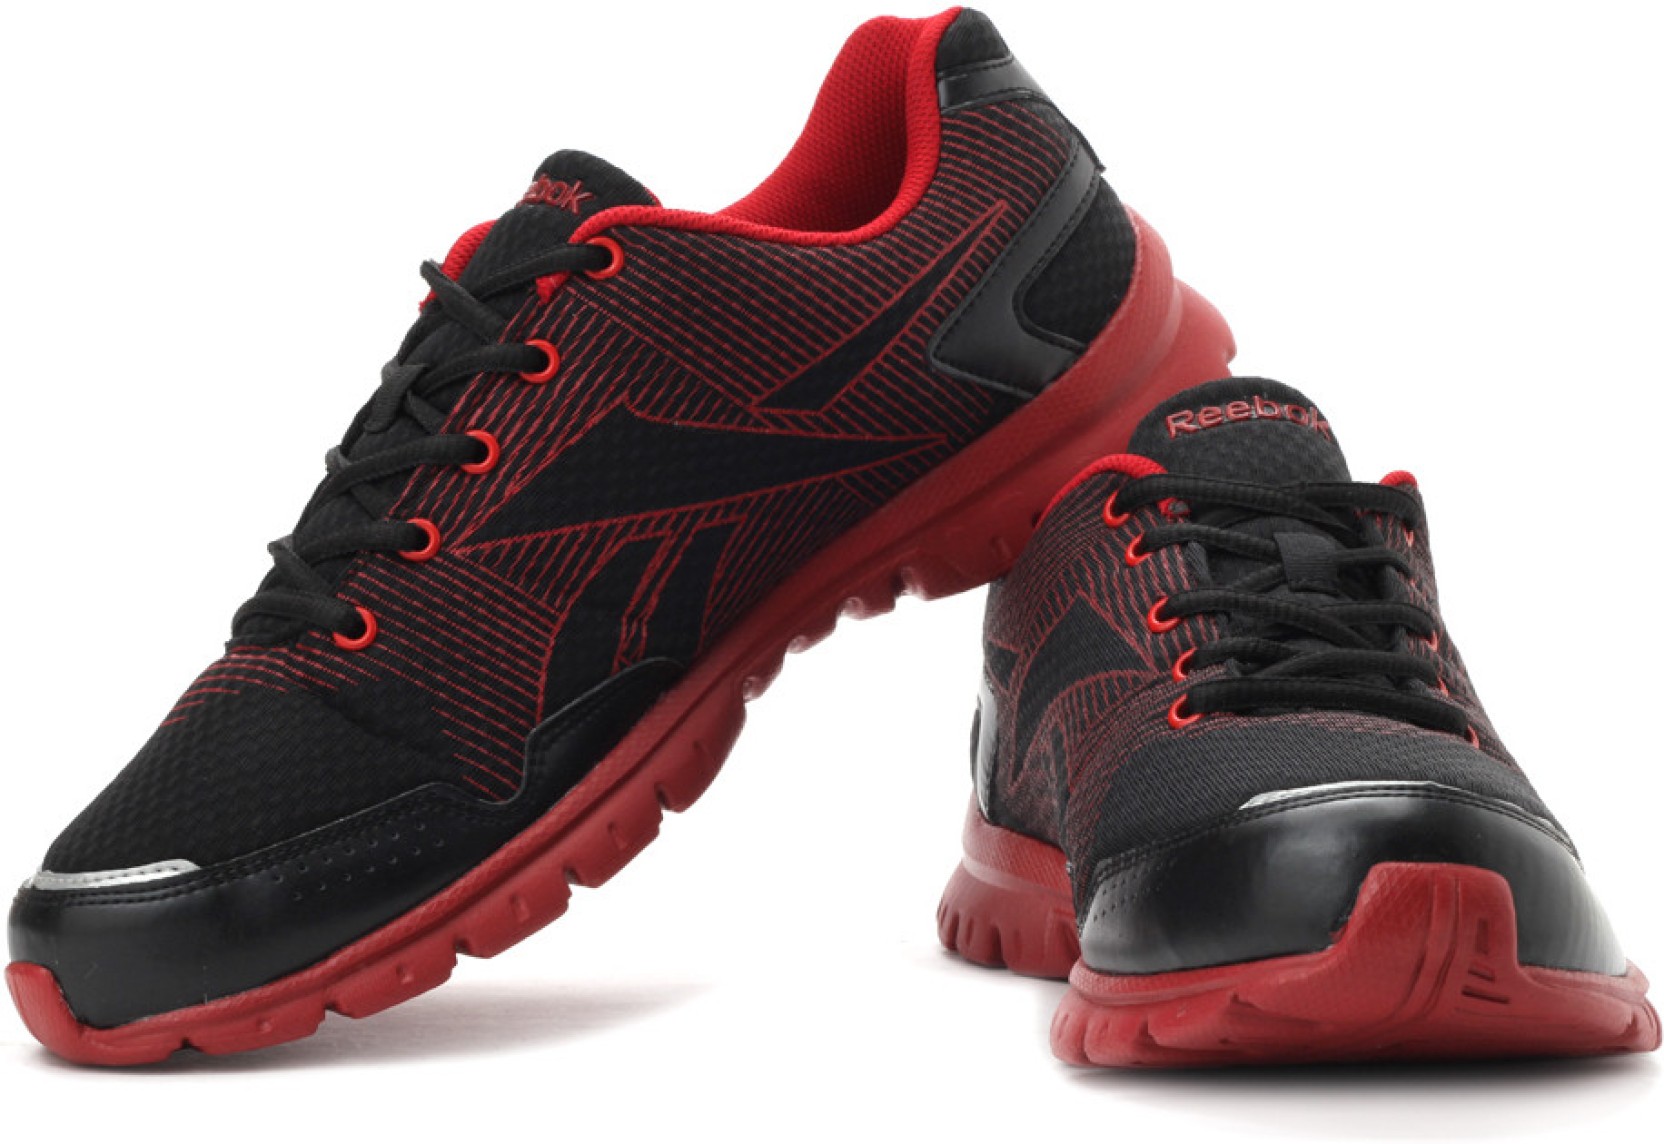 Reebok Rhythm Run Lp Running Shoes - Buy Black, Red Color ...